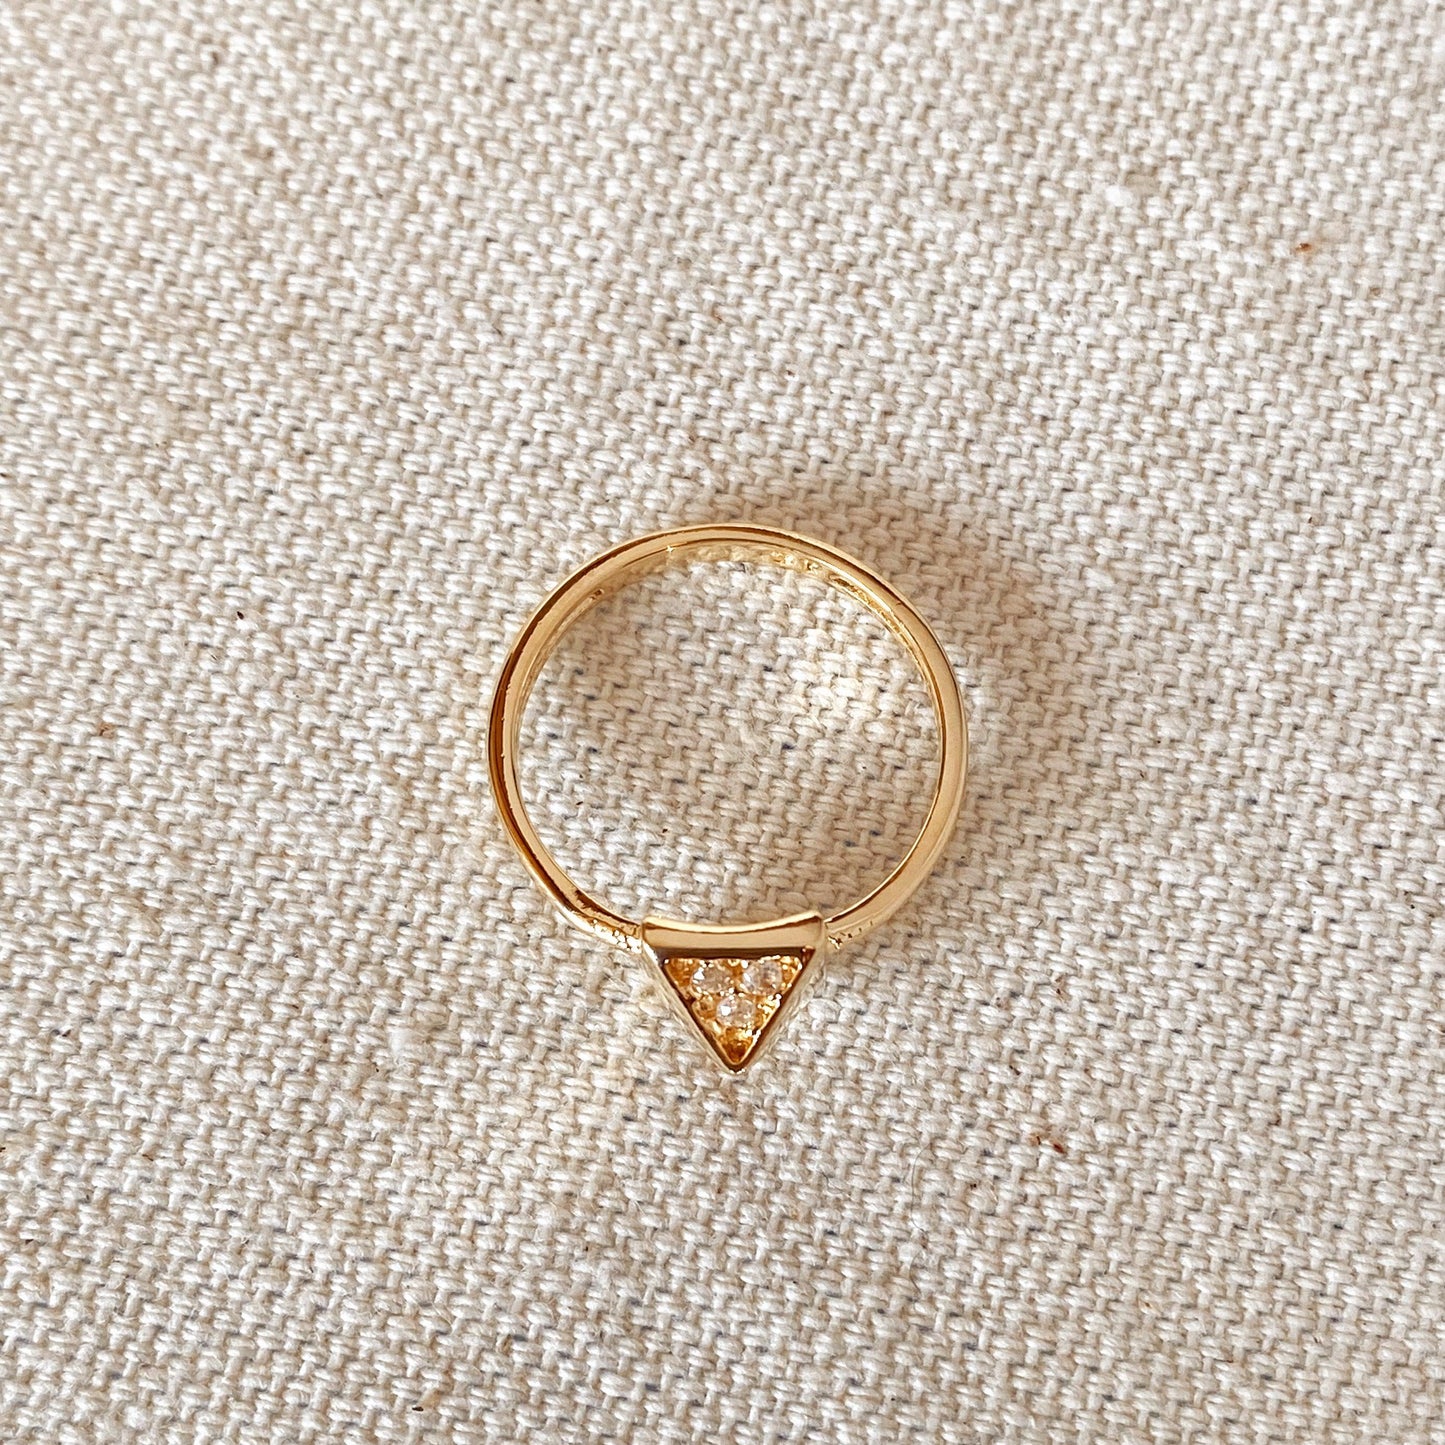 GoldFi 18k Gold Filled Pyramid Ring